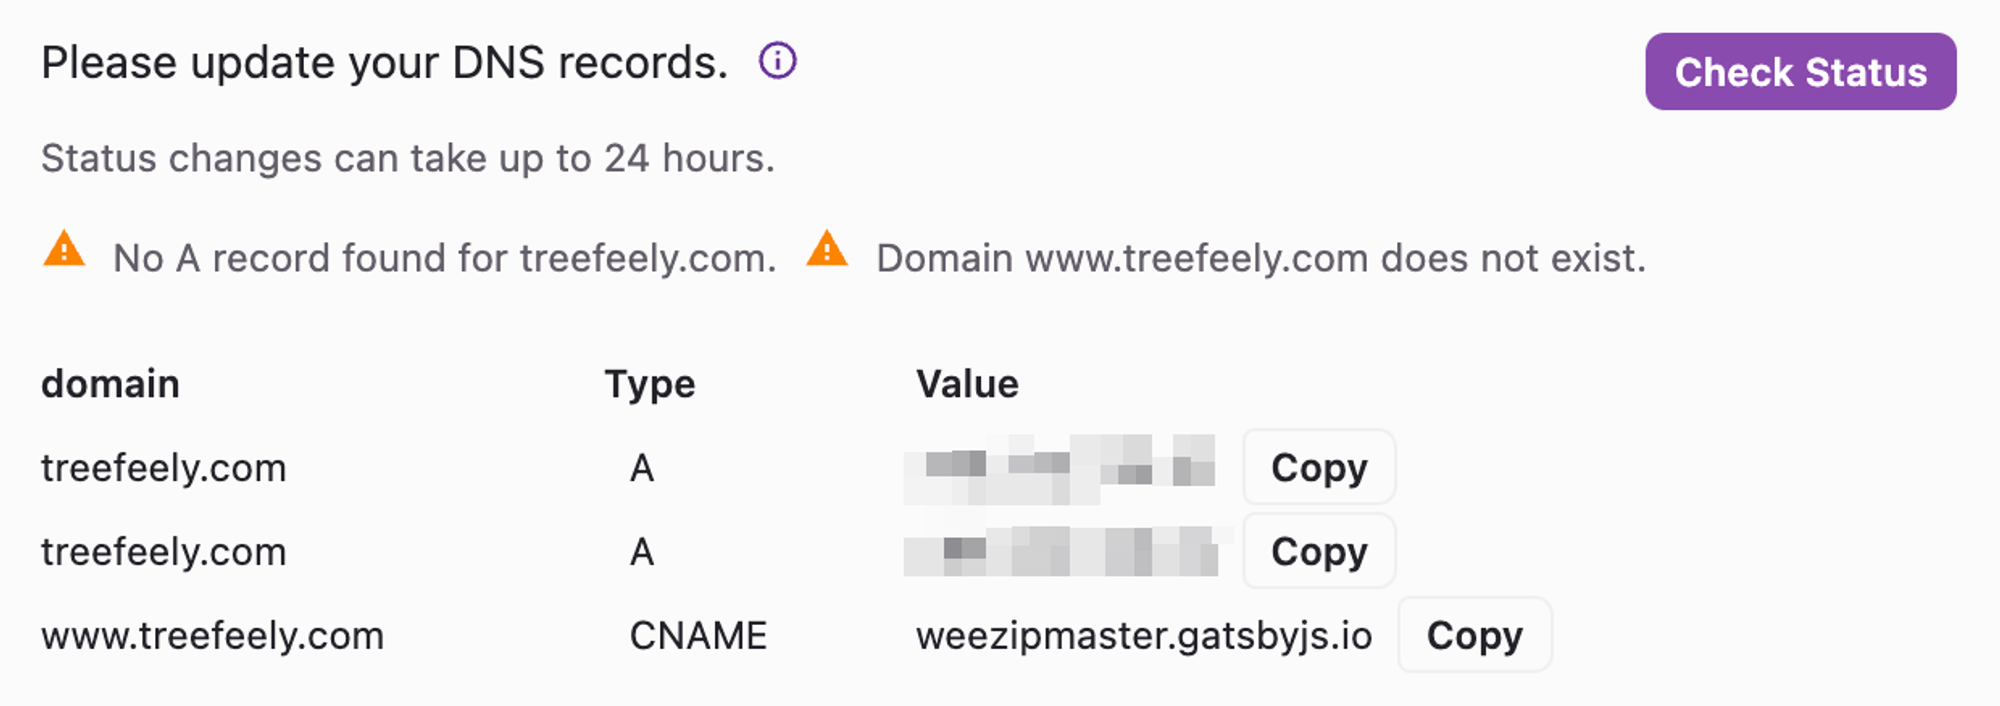  Gatsby Cloude에서 확인할 수 있는 연결 정보. domain을 구매한 곳에 이 값을 입력하여 인증해주어야한다.